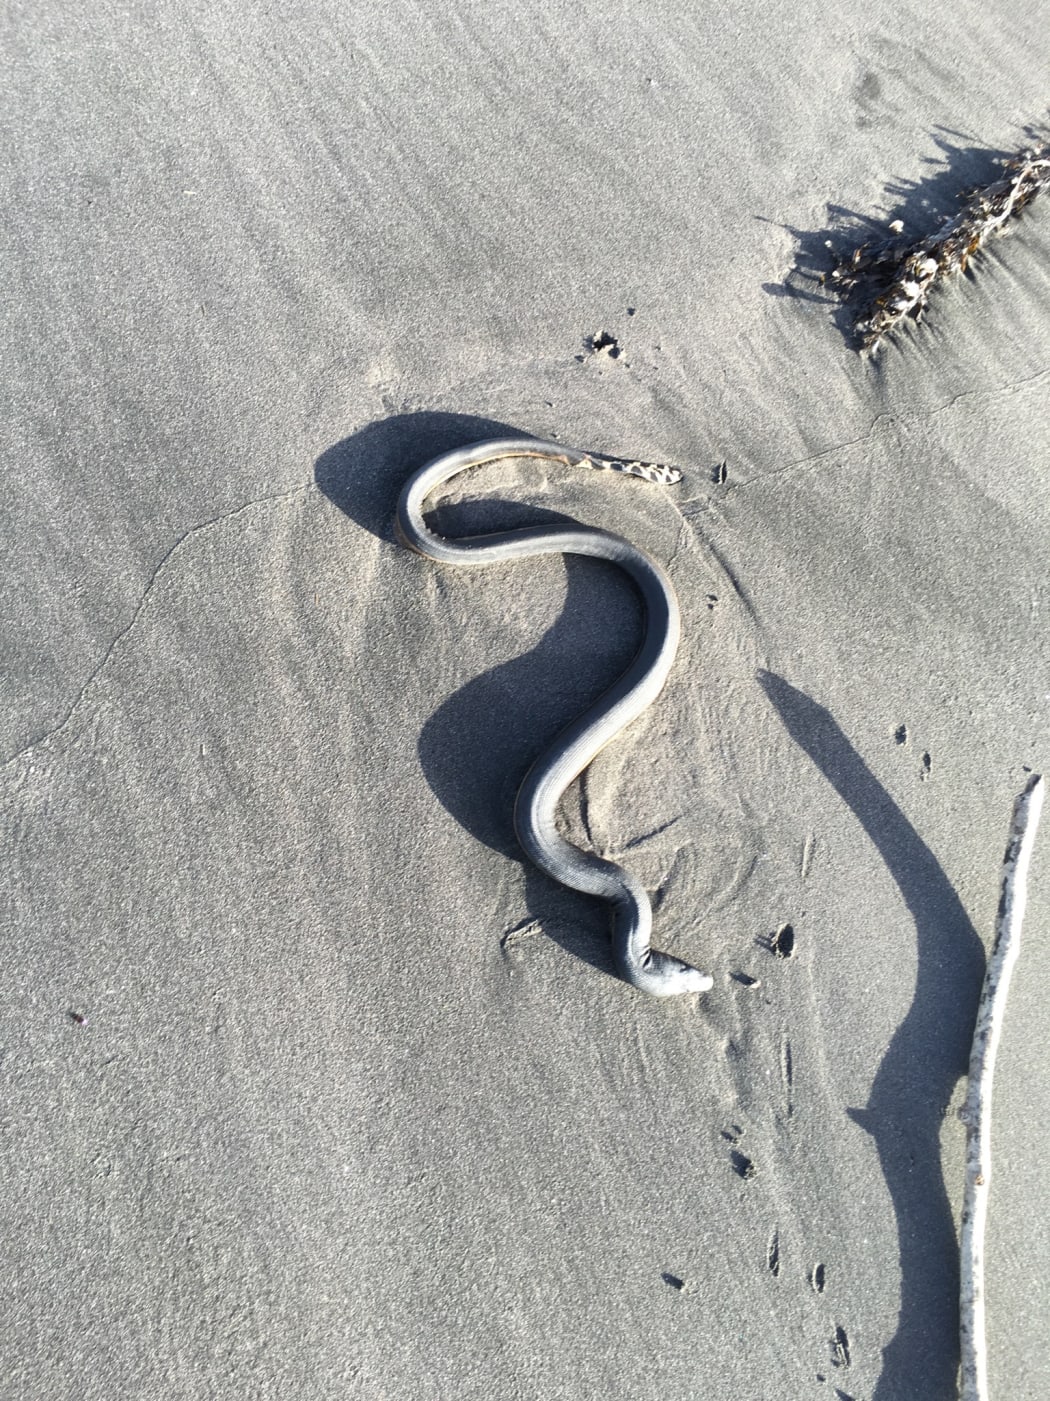 This yellow-bellied sea snake washed up on Oakura beach, just north of Taranaki.